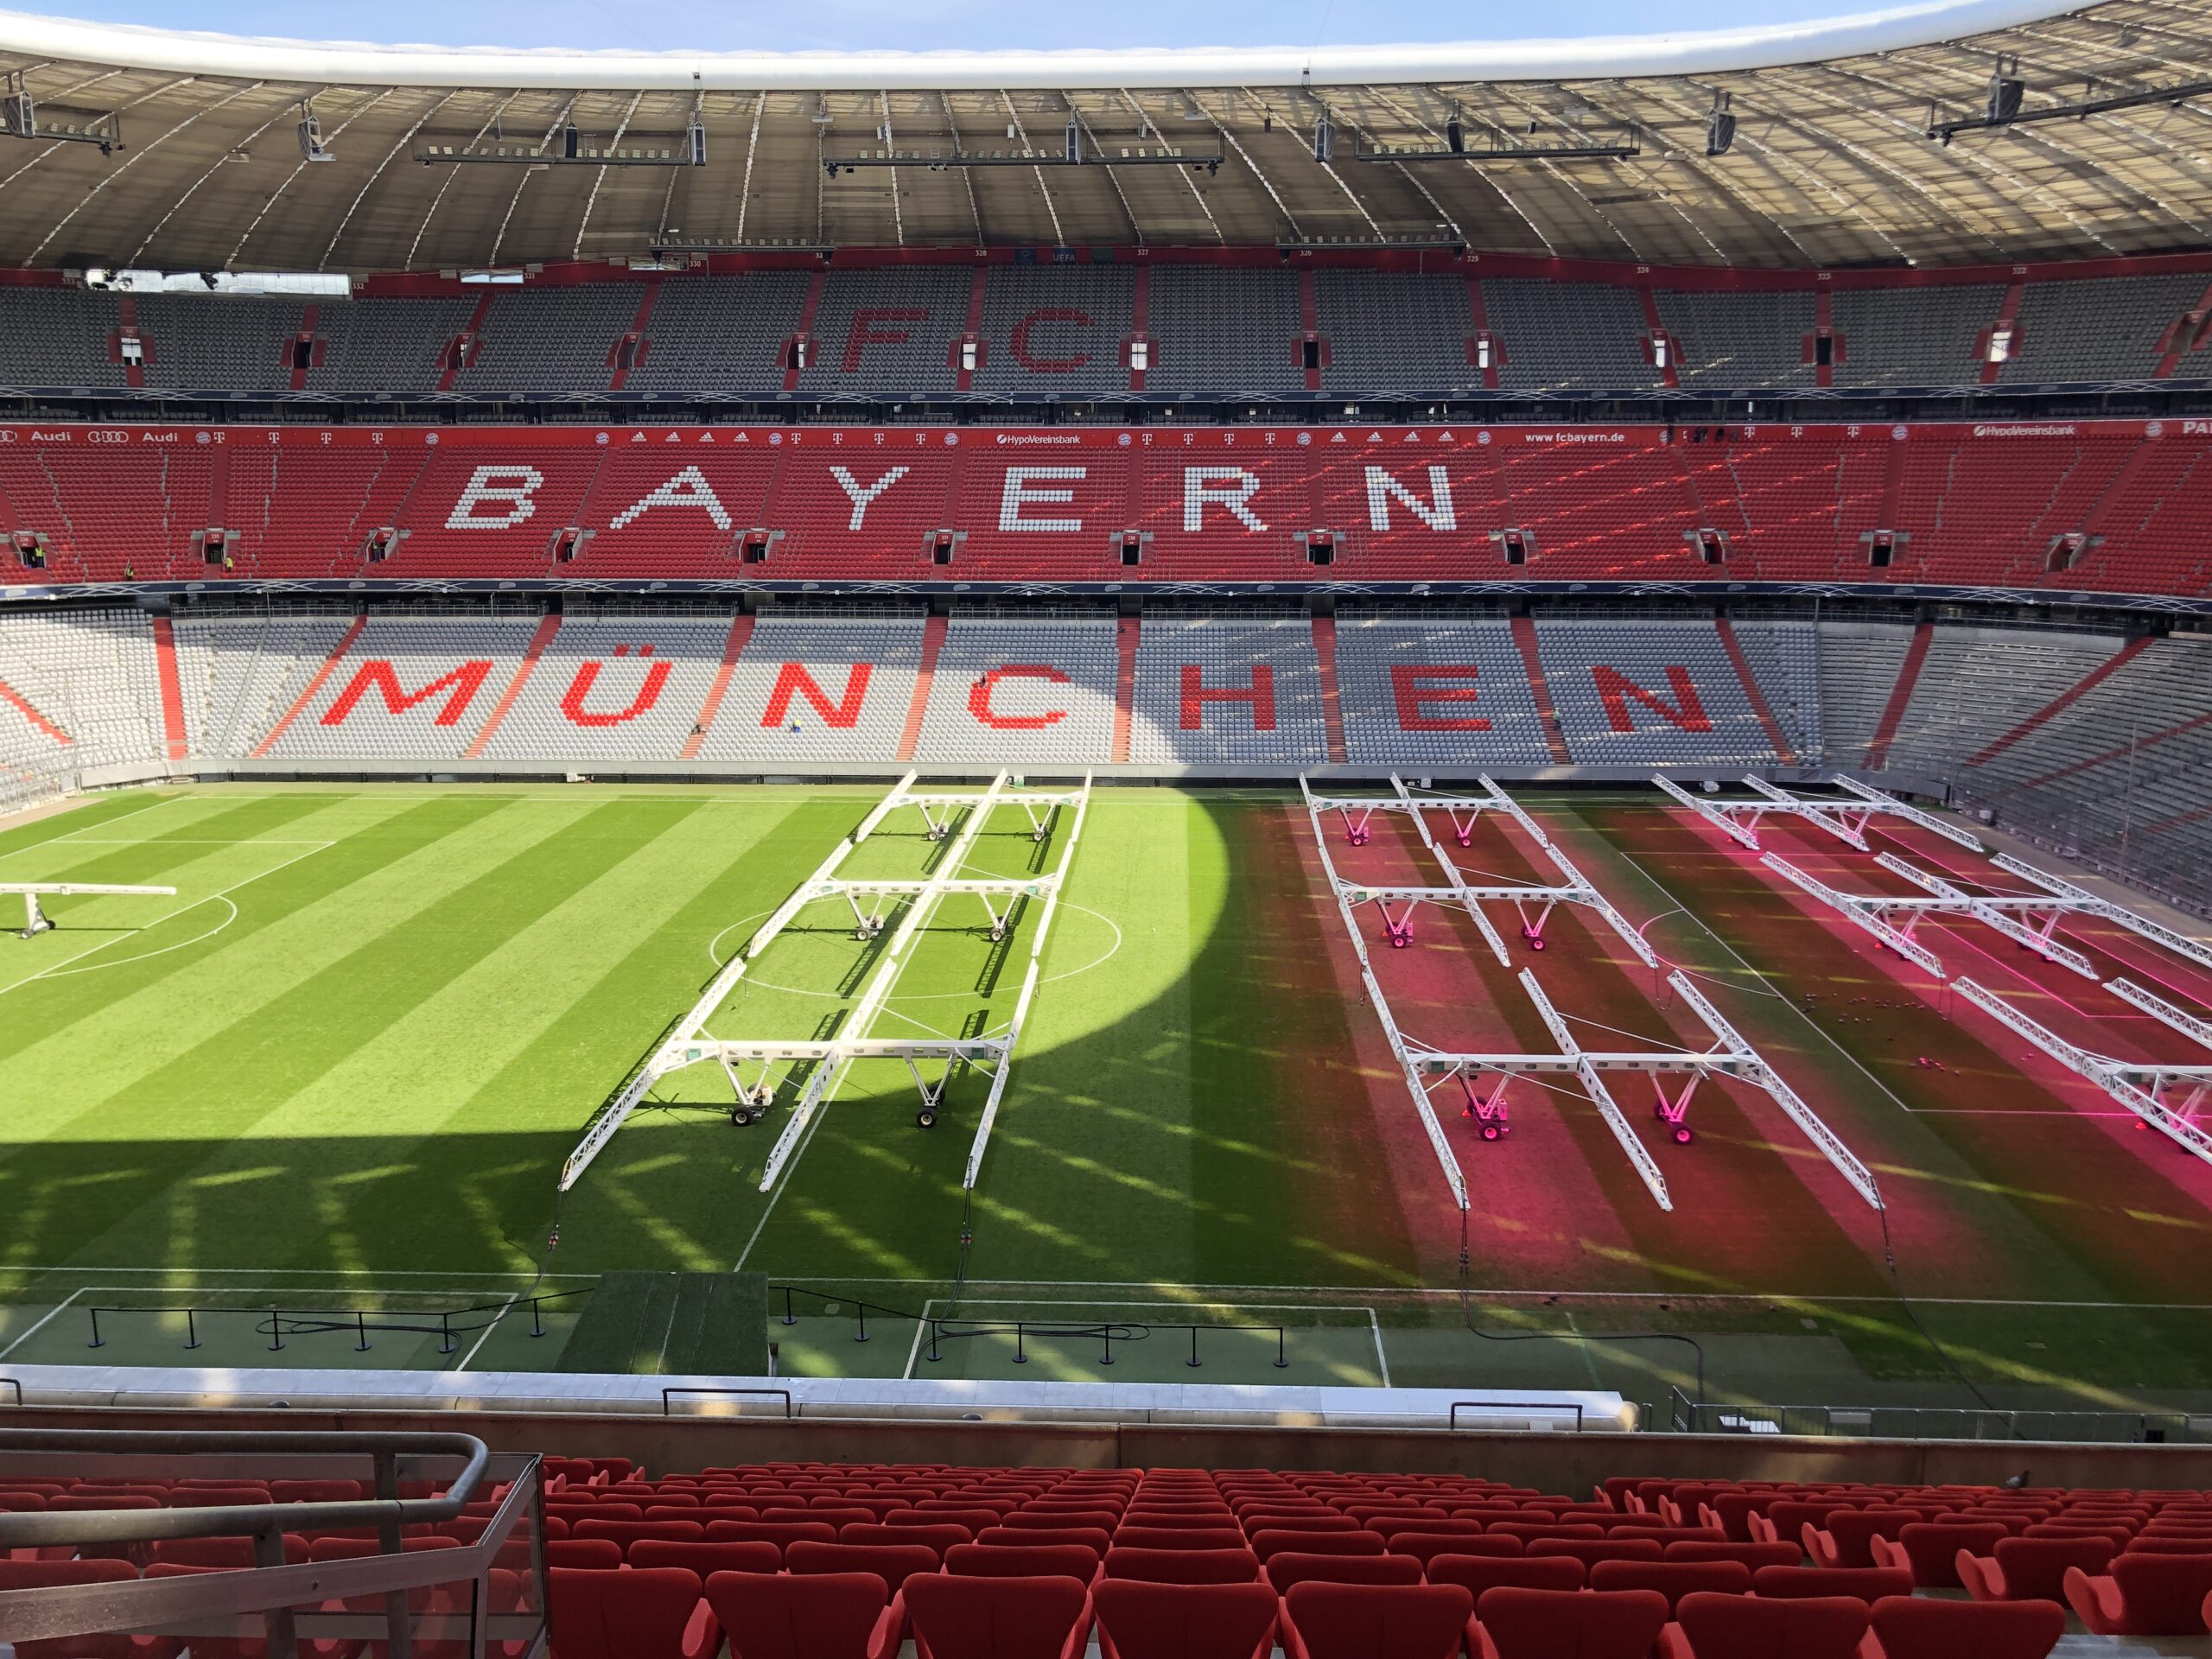 LED440 grow lighting technology on the Allianz Arena stadium pitch.